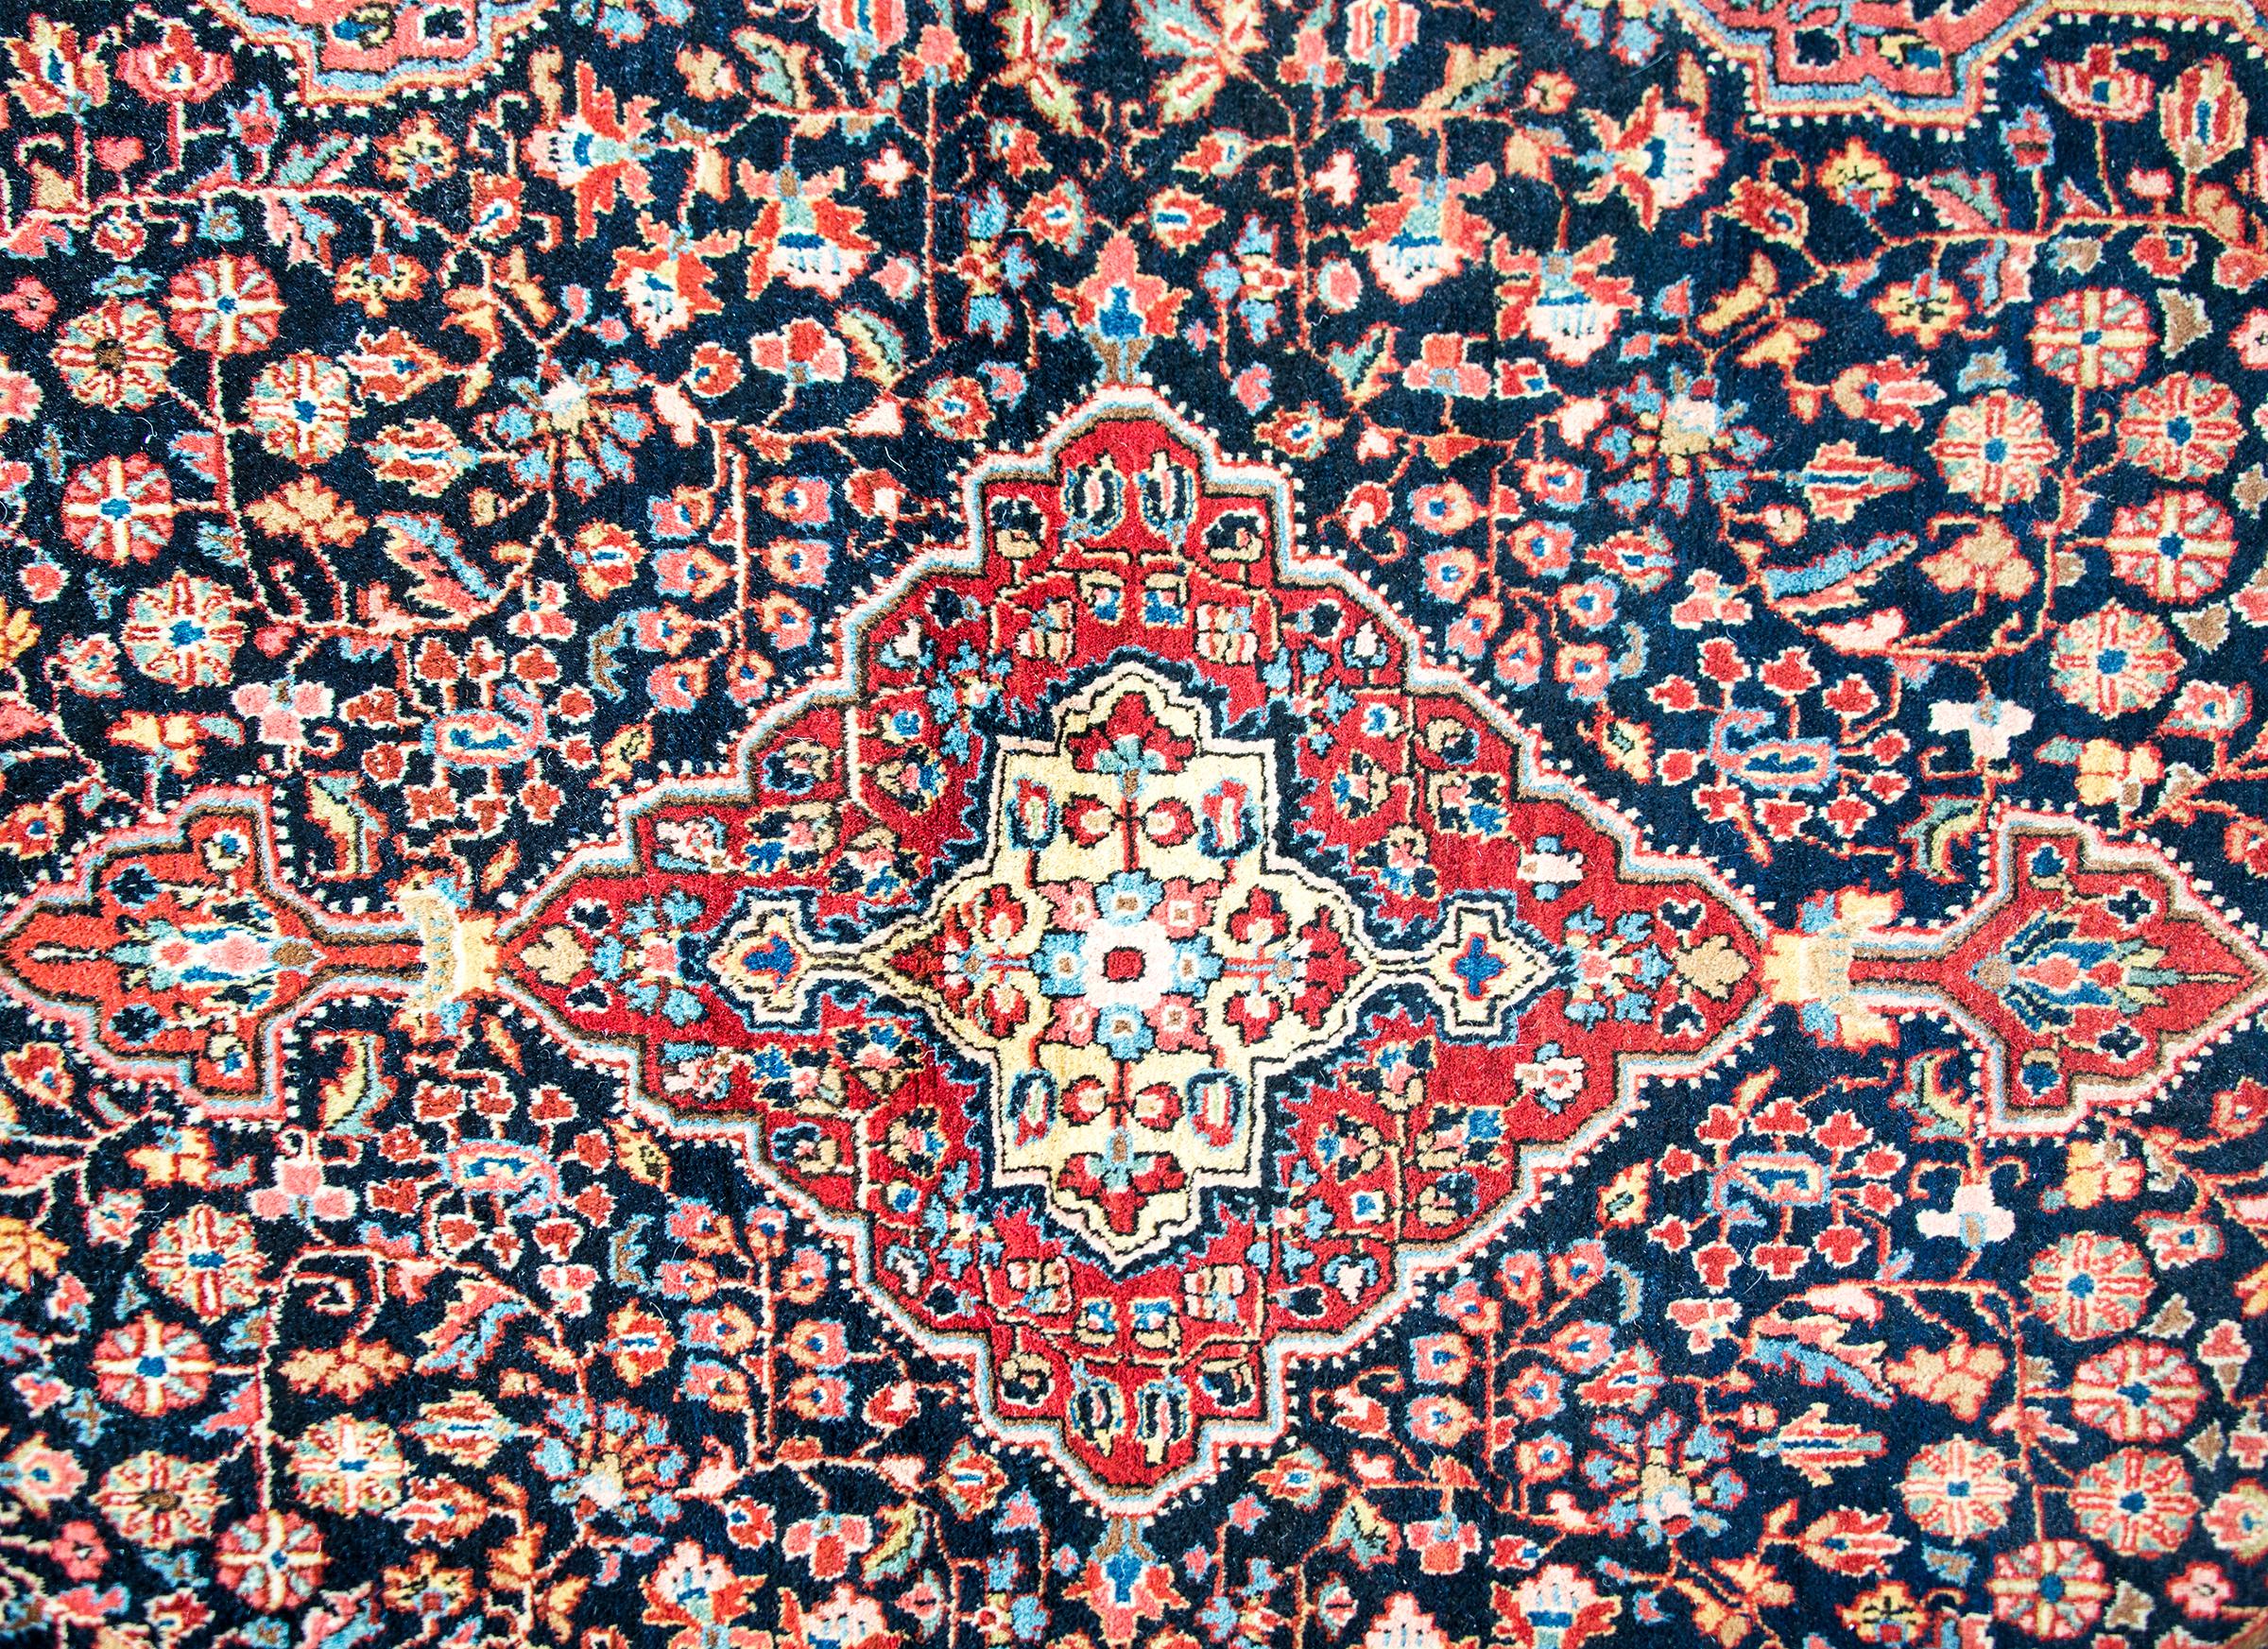 Wool Early 20th Century Persian Bidjar Rug For Sale